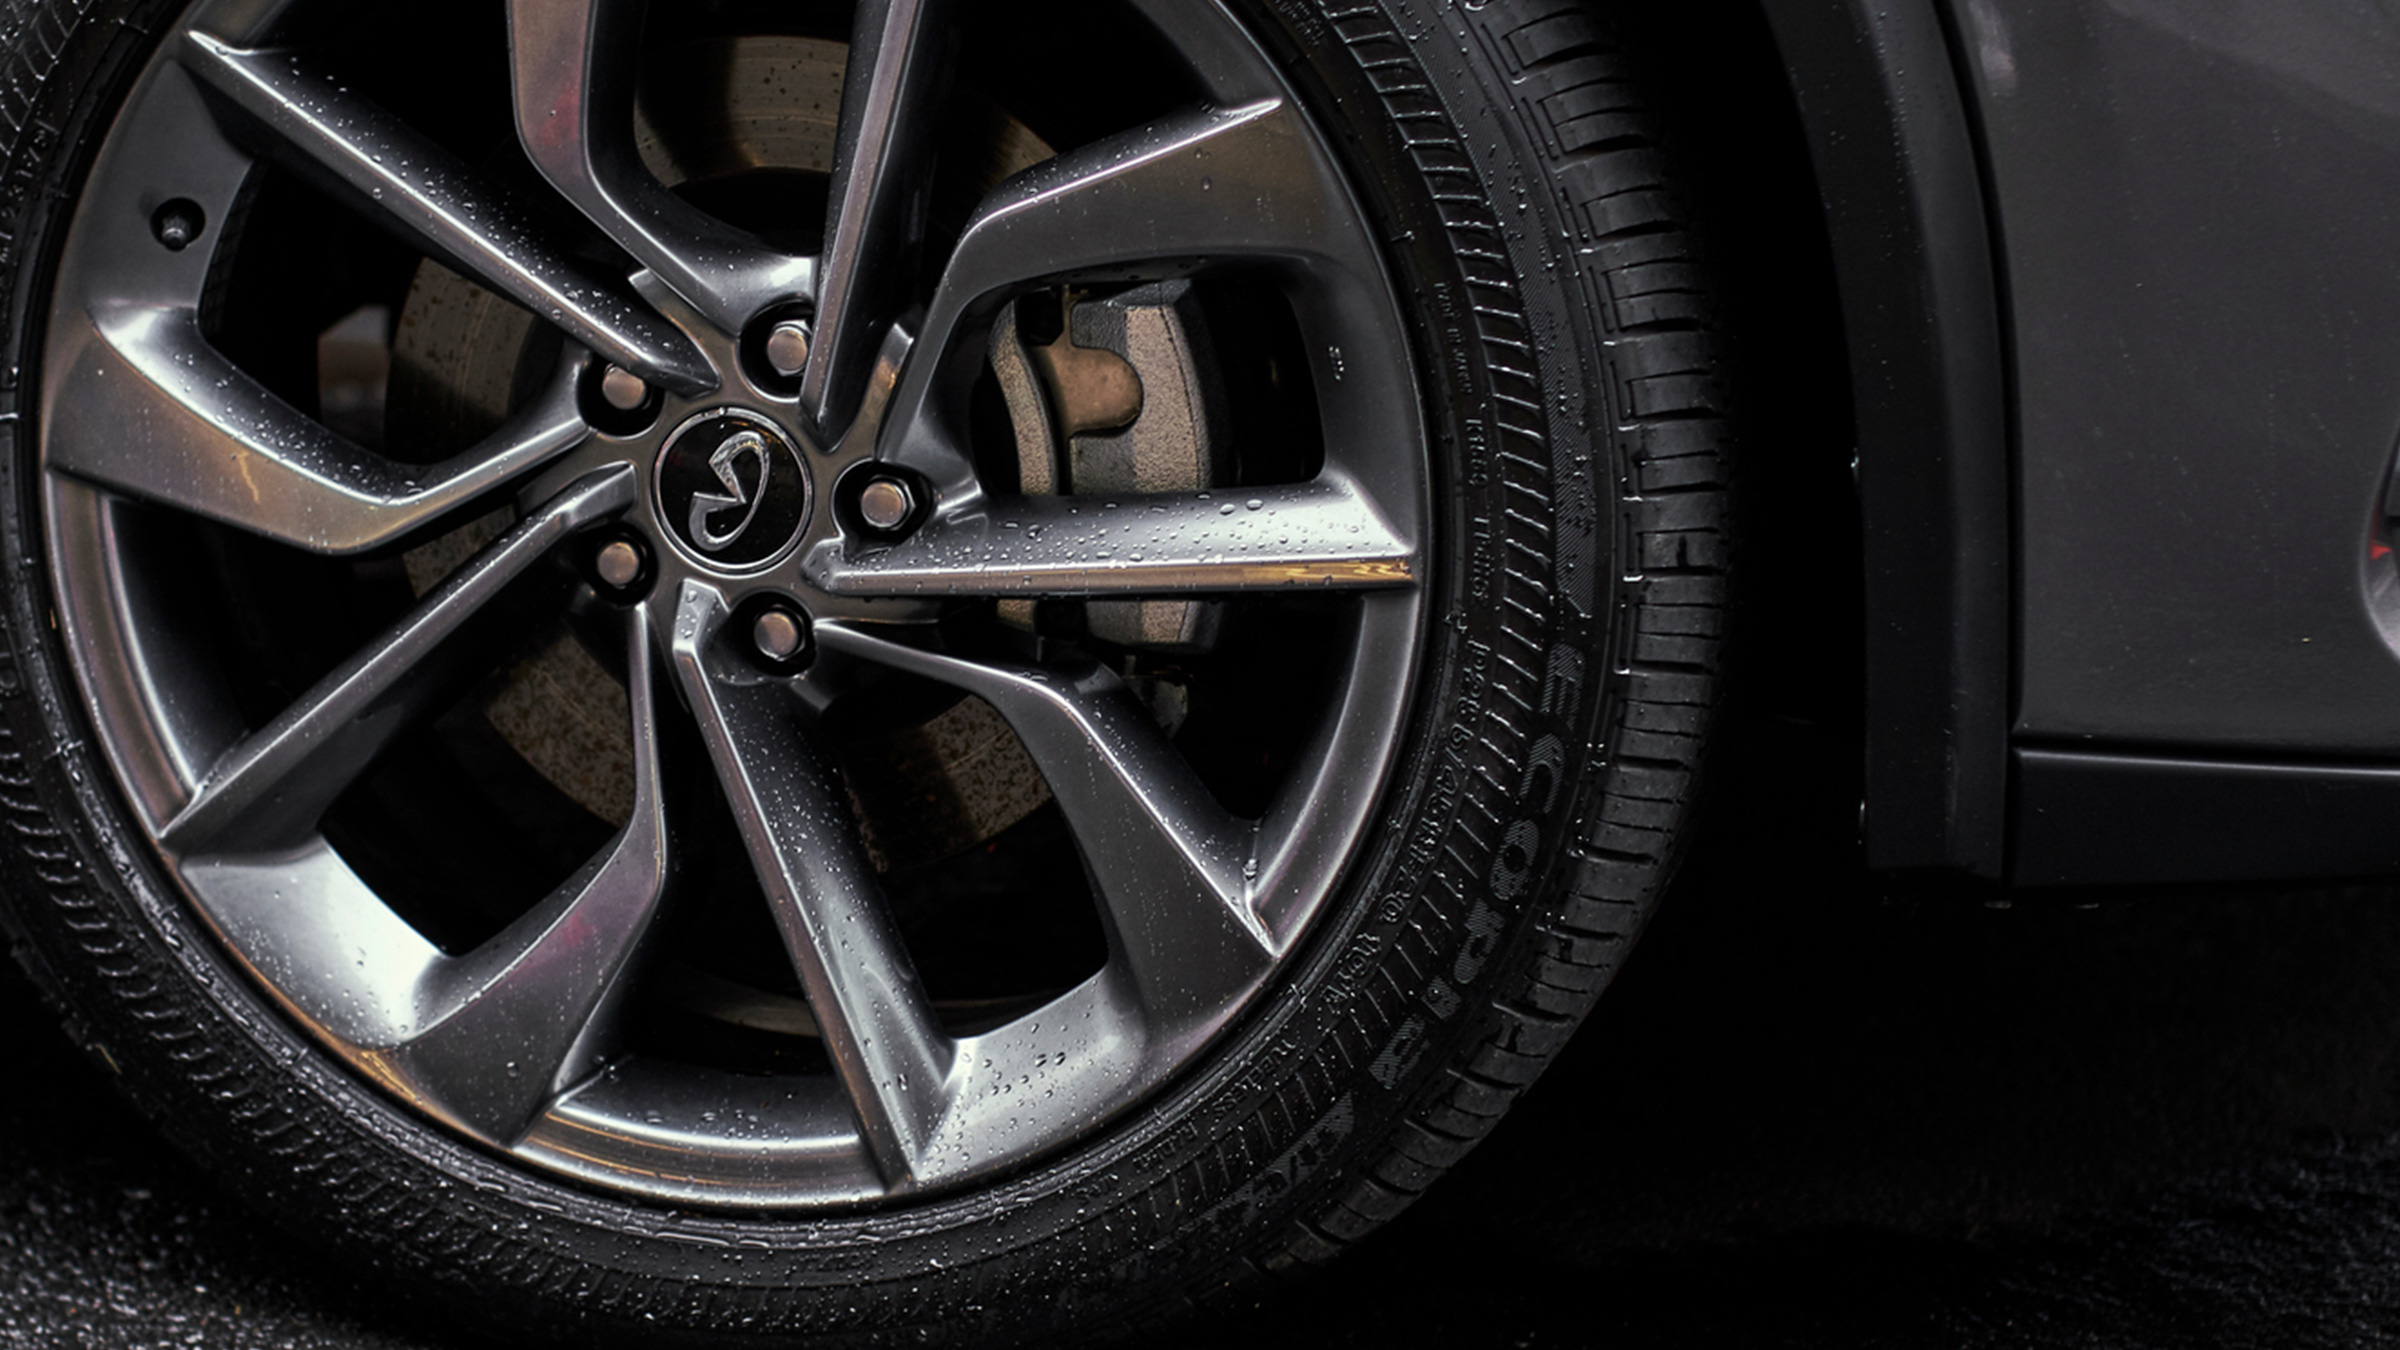 2022 INFINITI QX50 SUV exterior tire.